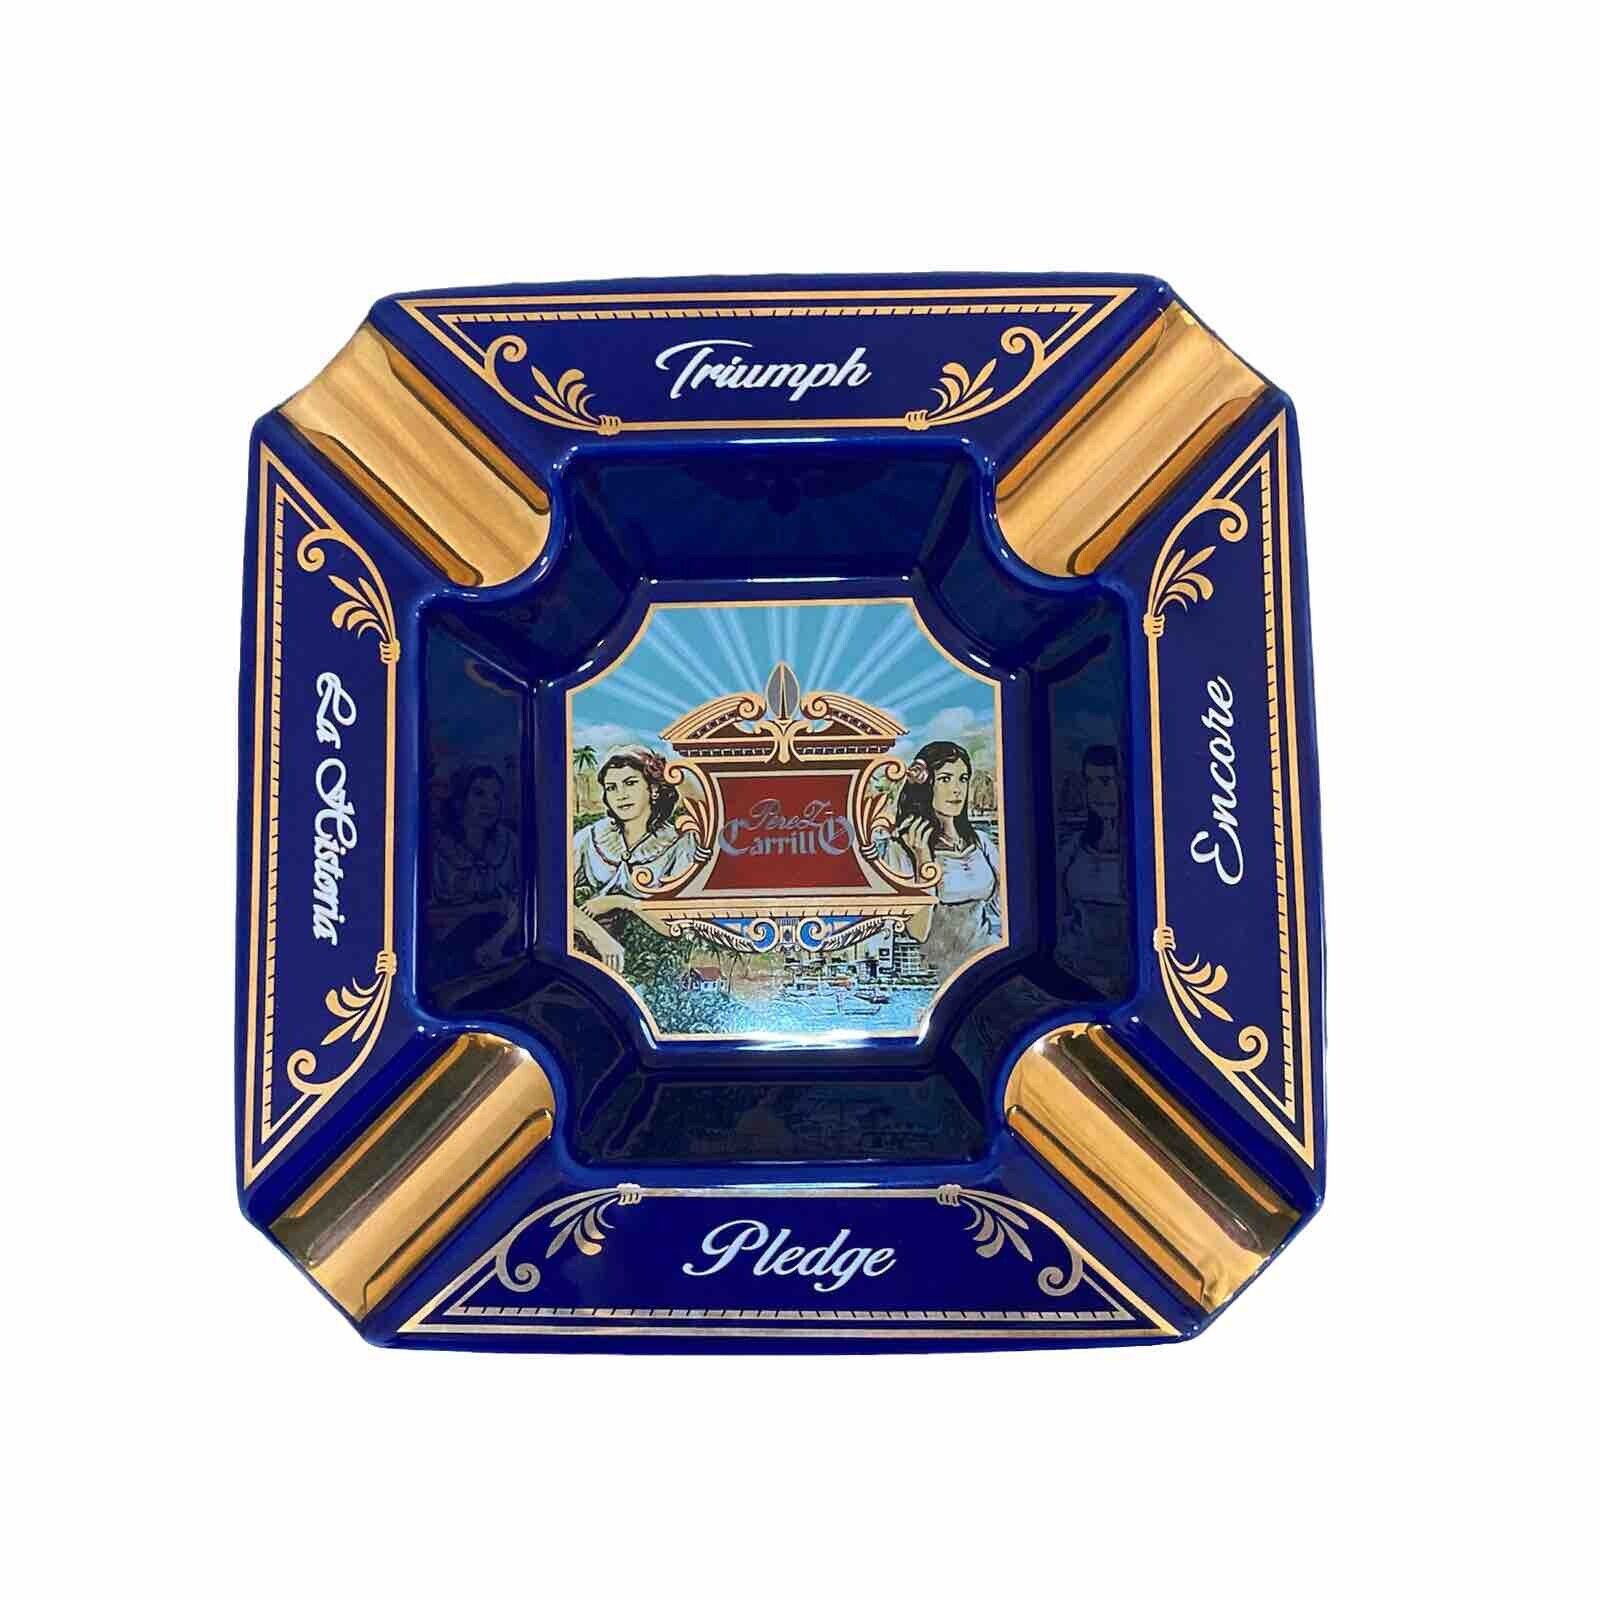 EP Carillo Pledge Triumph Cigar Ashtray Deep Blue Gold Embossed 4 Divets Ceramic